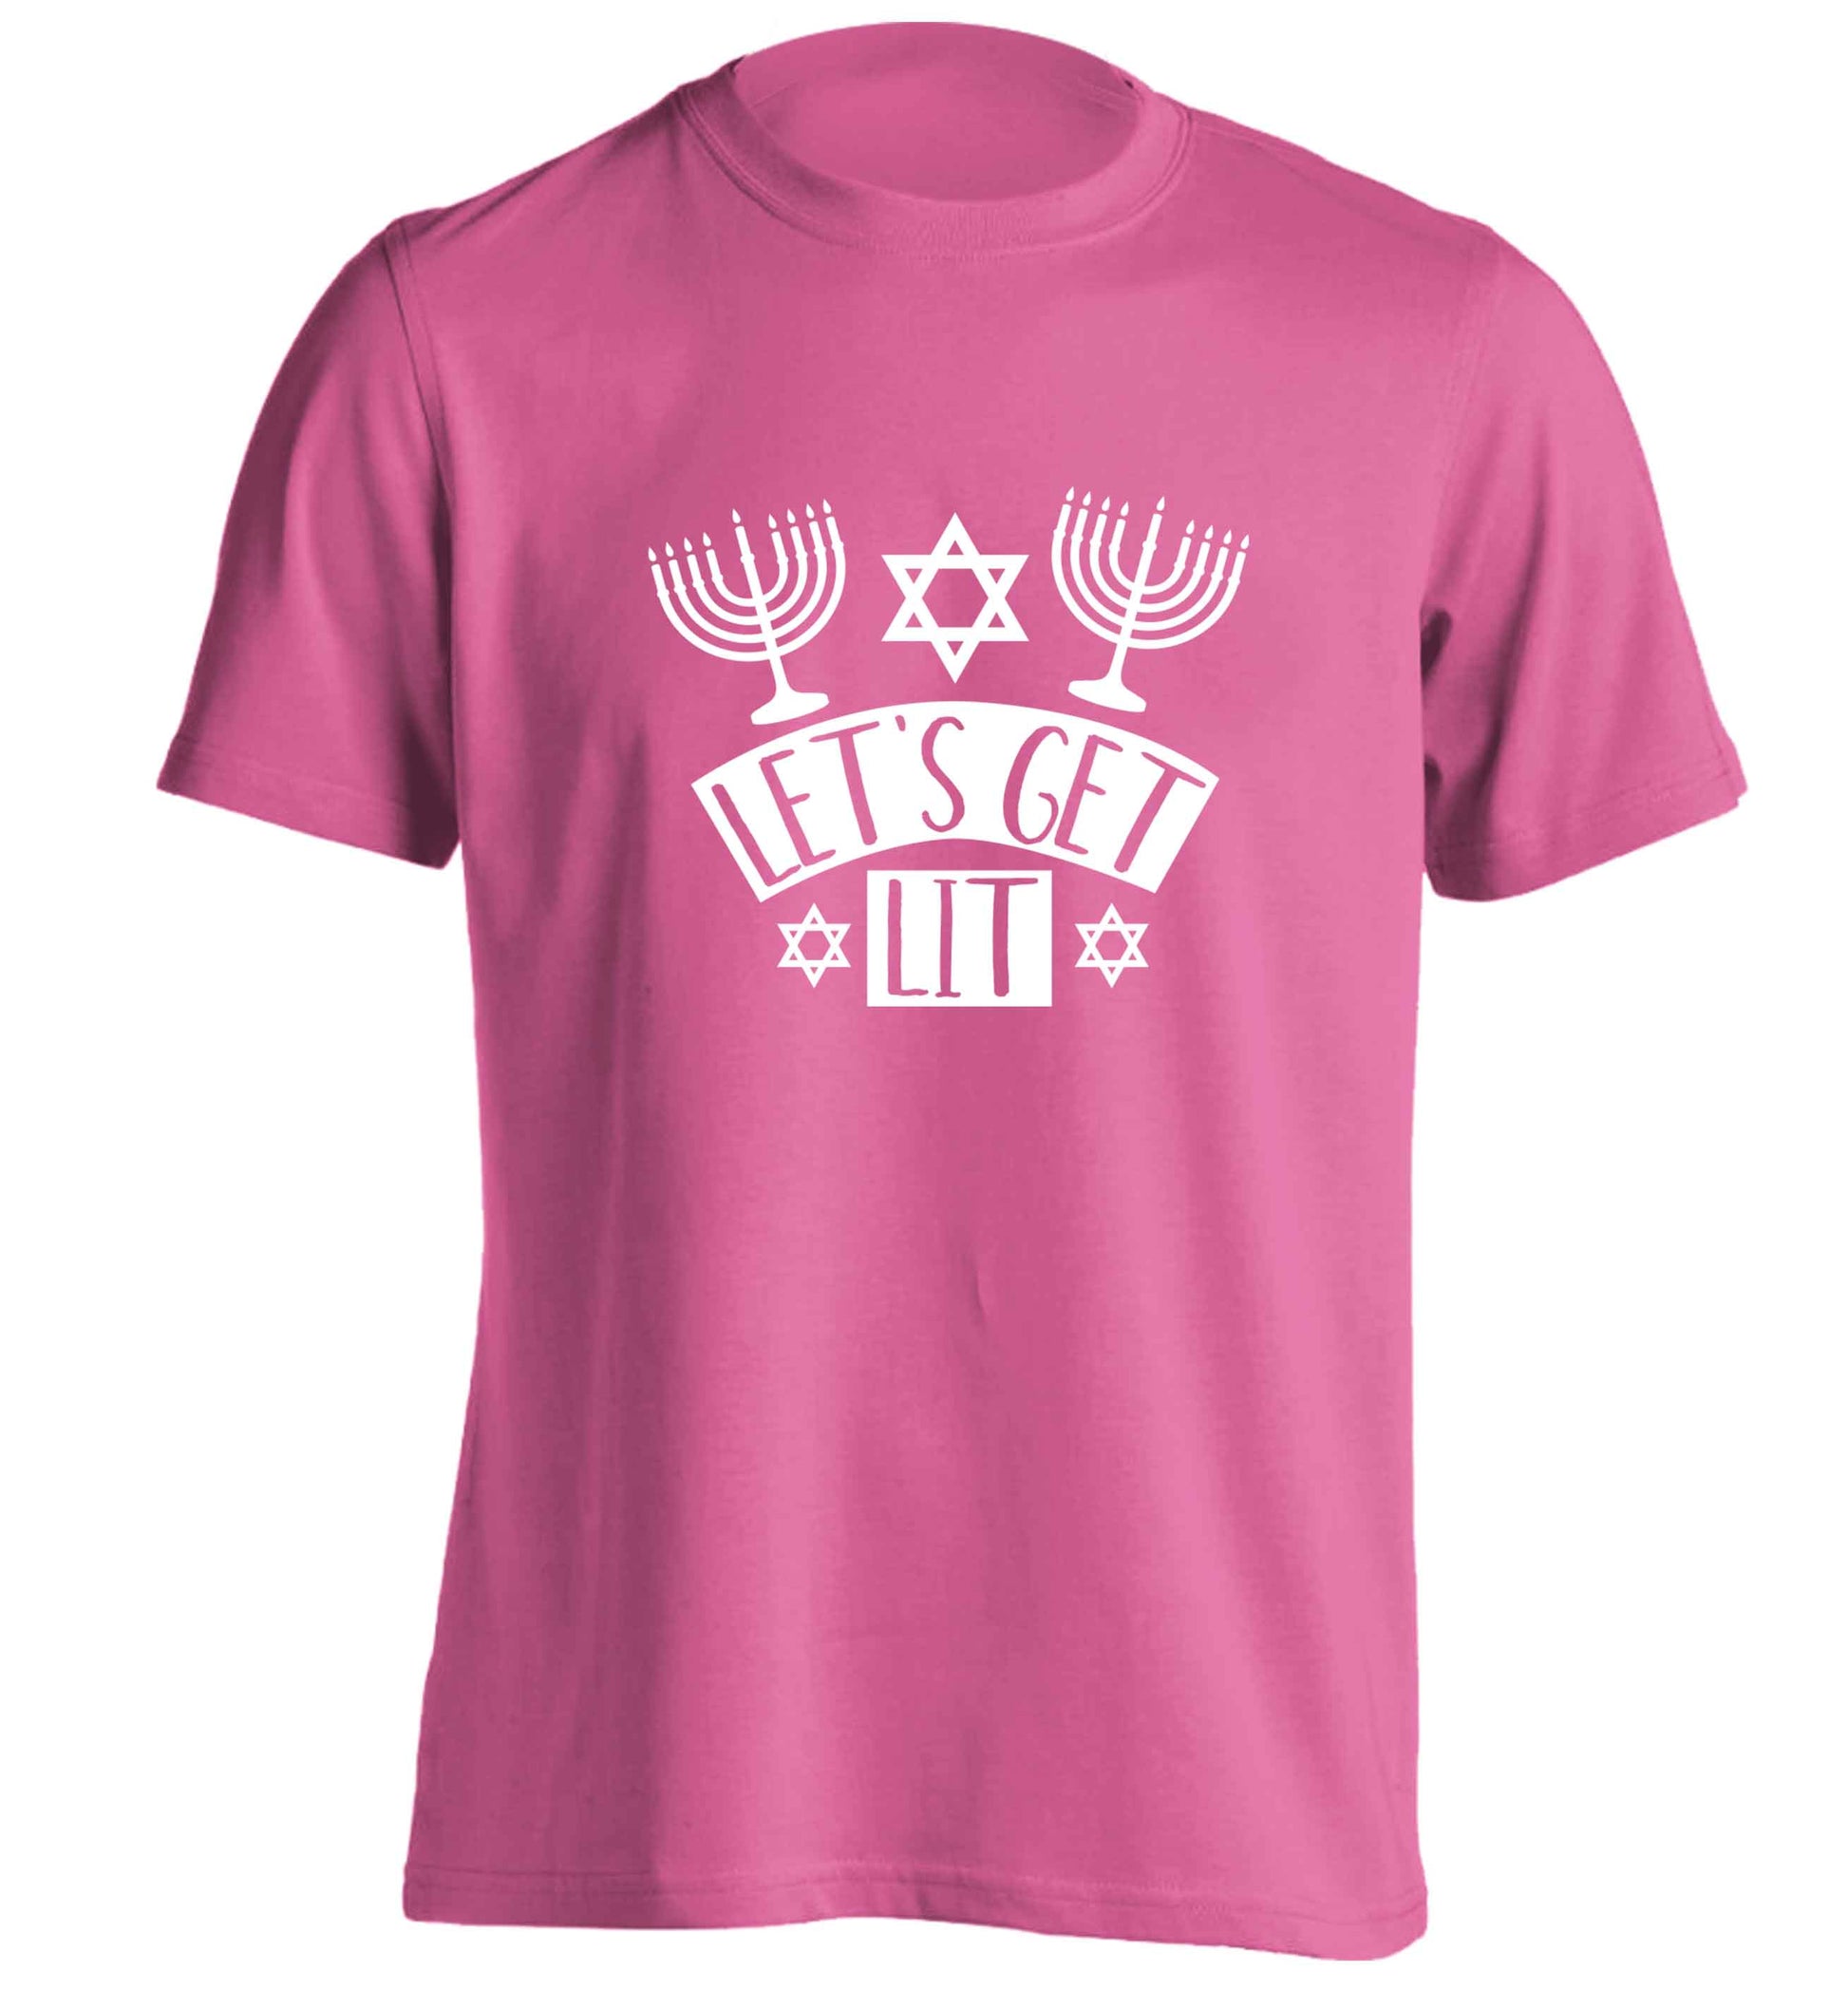 Let's get lit adults unisex pink Tshirt 2XL